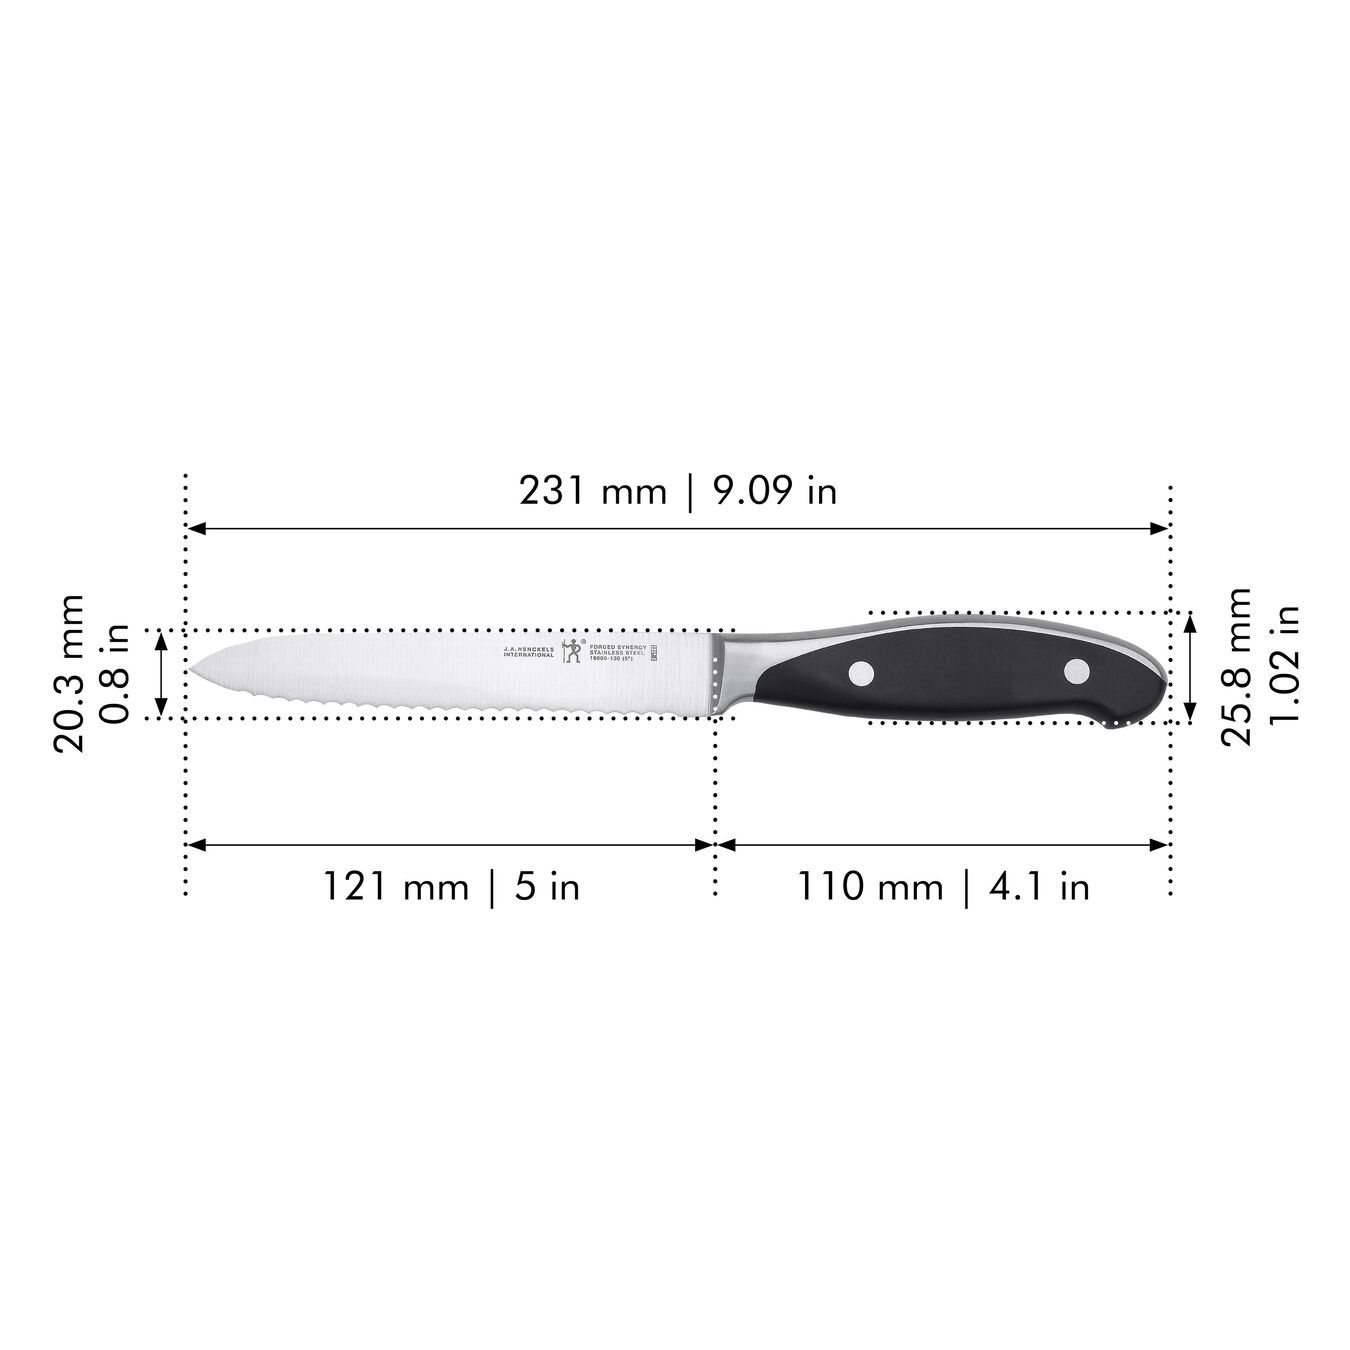 5-inch Utility knife, Serrated edge ,,large 2